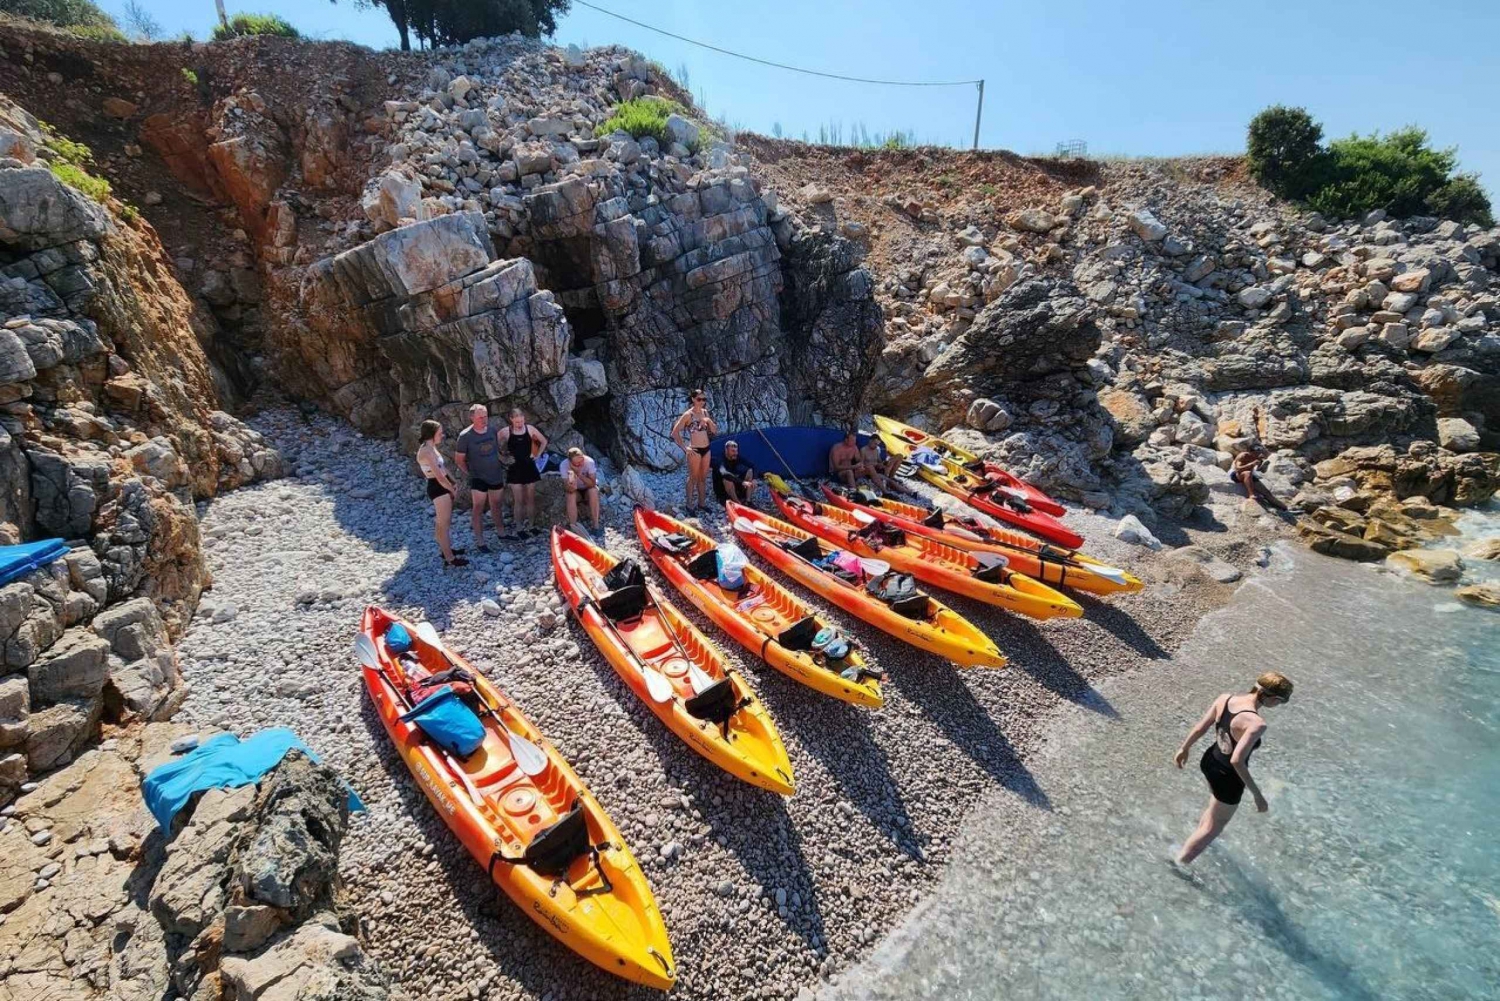 Blue Cave Tour on Kayaks in Montenegro